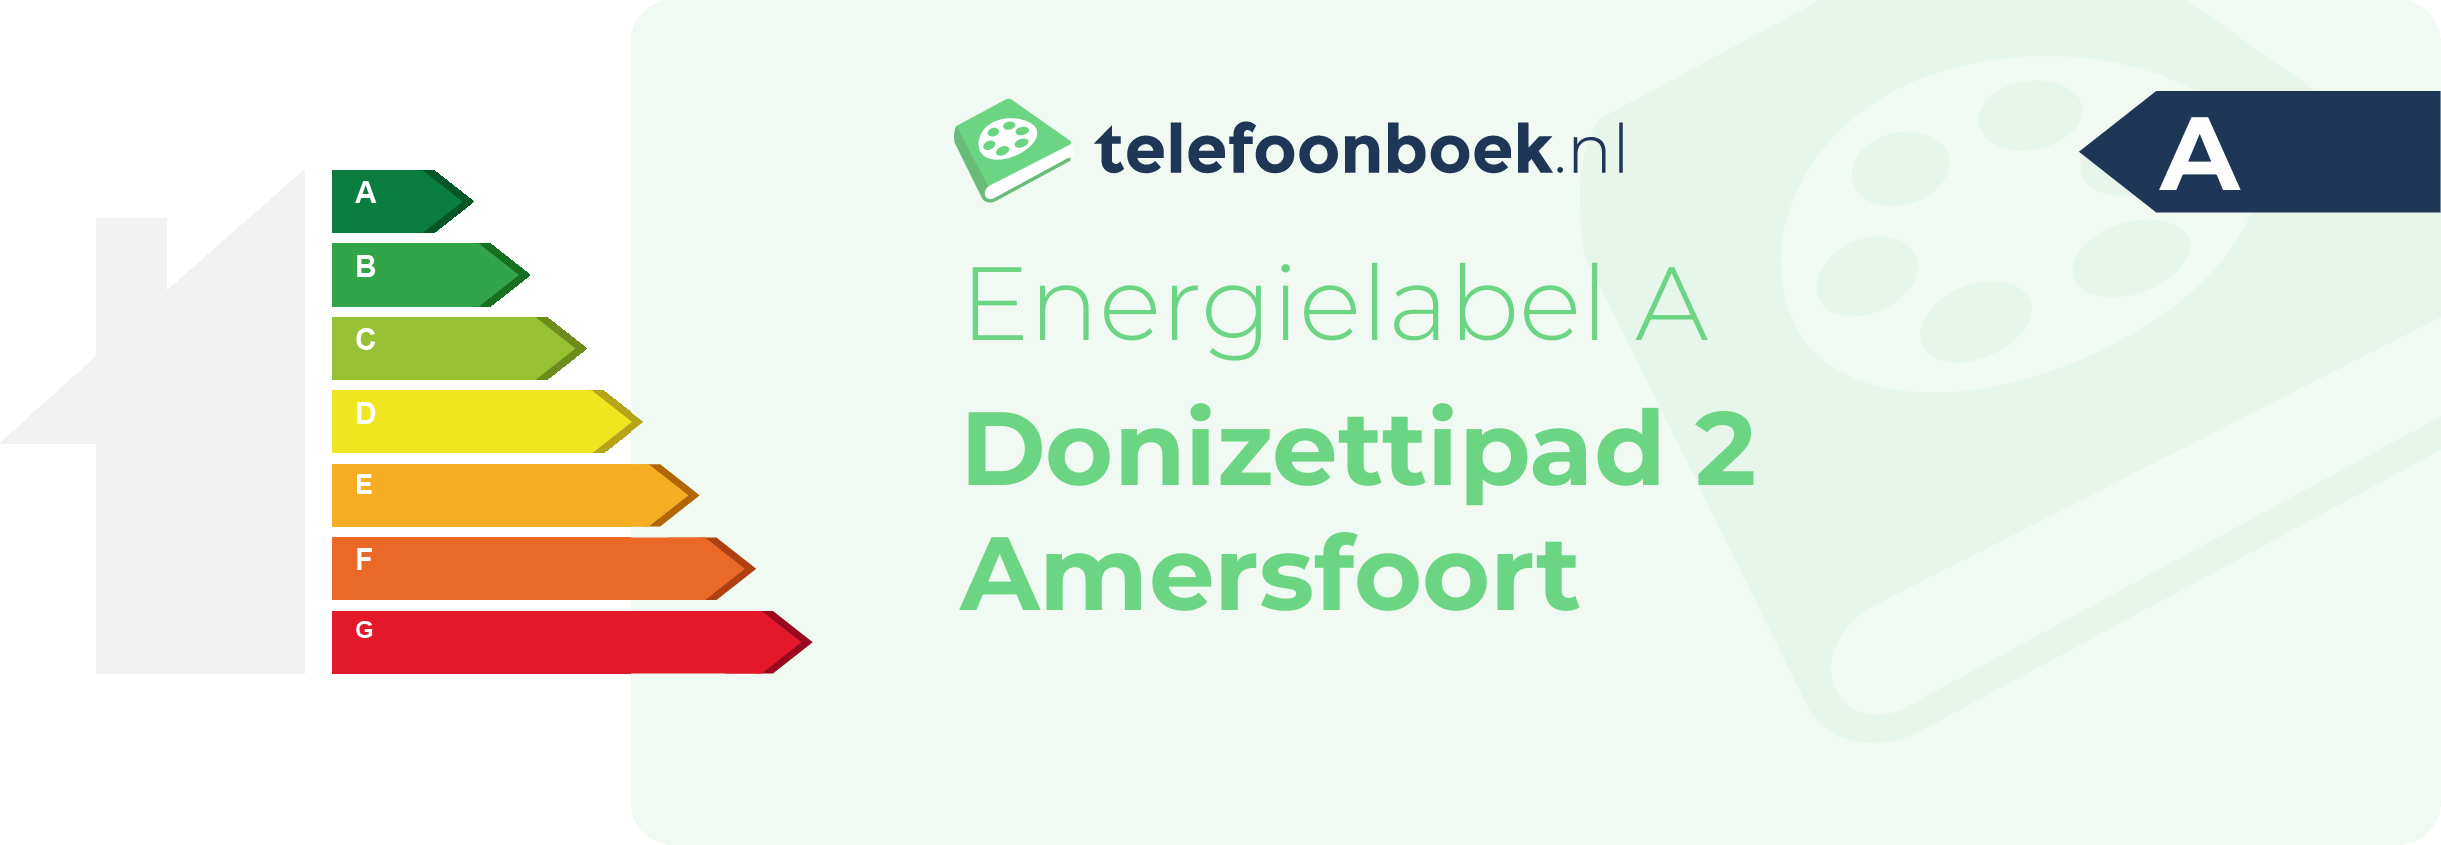 Energielabel Donizettipad 2 Amersfoort